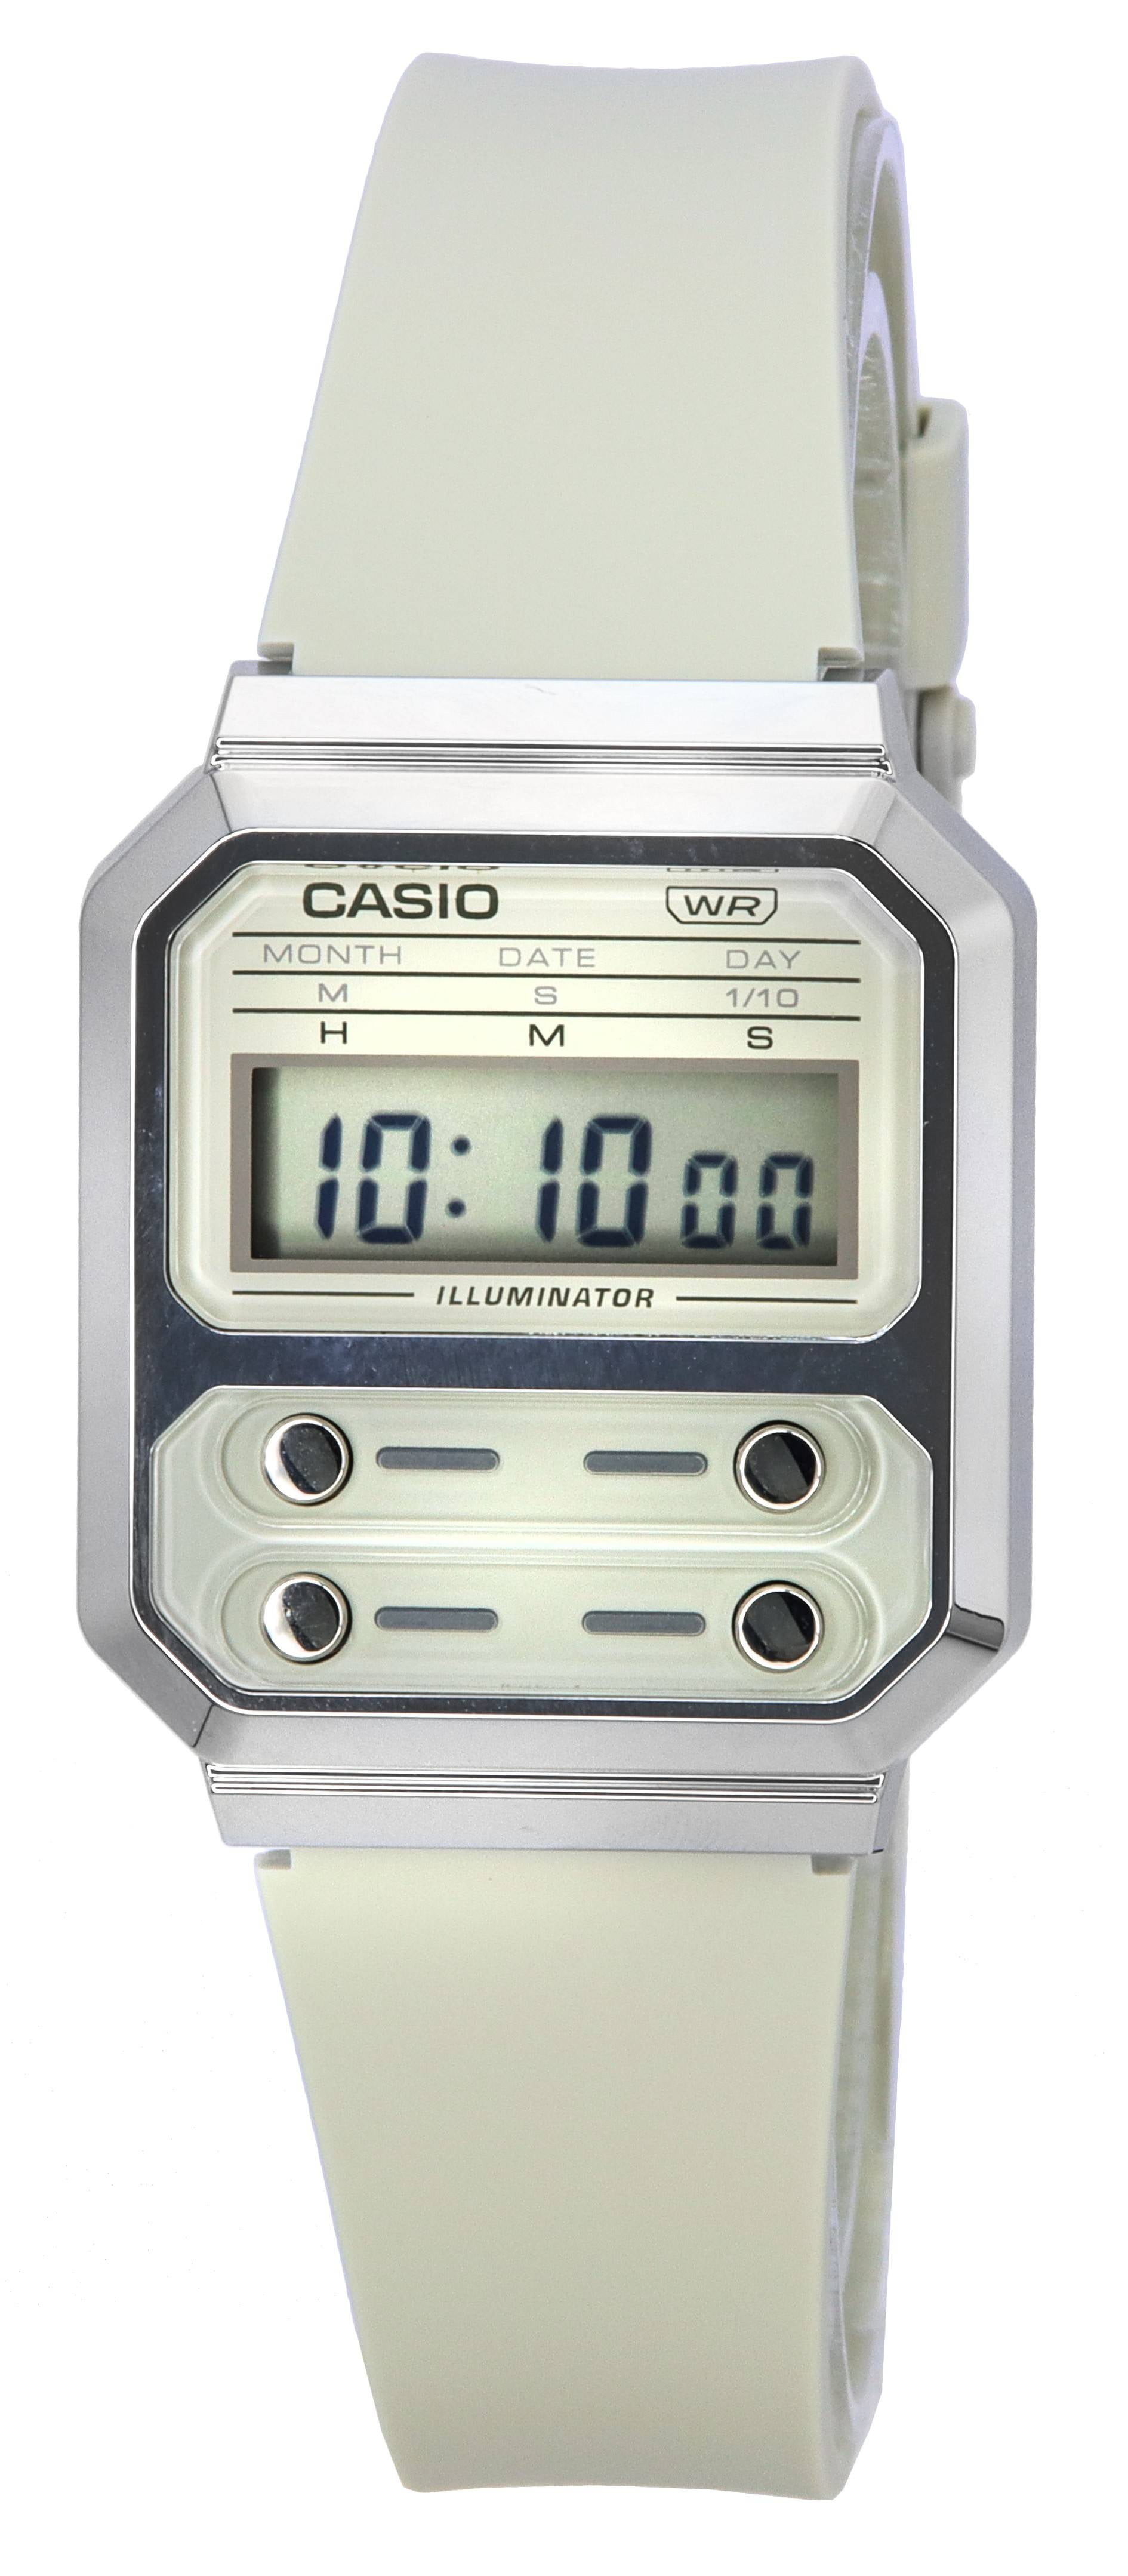  Casio - Mens Digital Sport Watch (AE1500WH-1AV) : Clothing,  Shoes & Jewelry